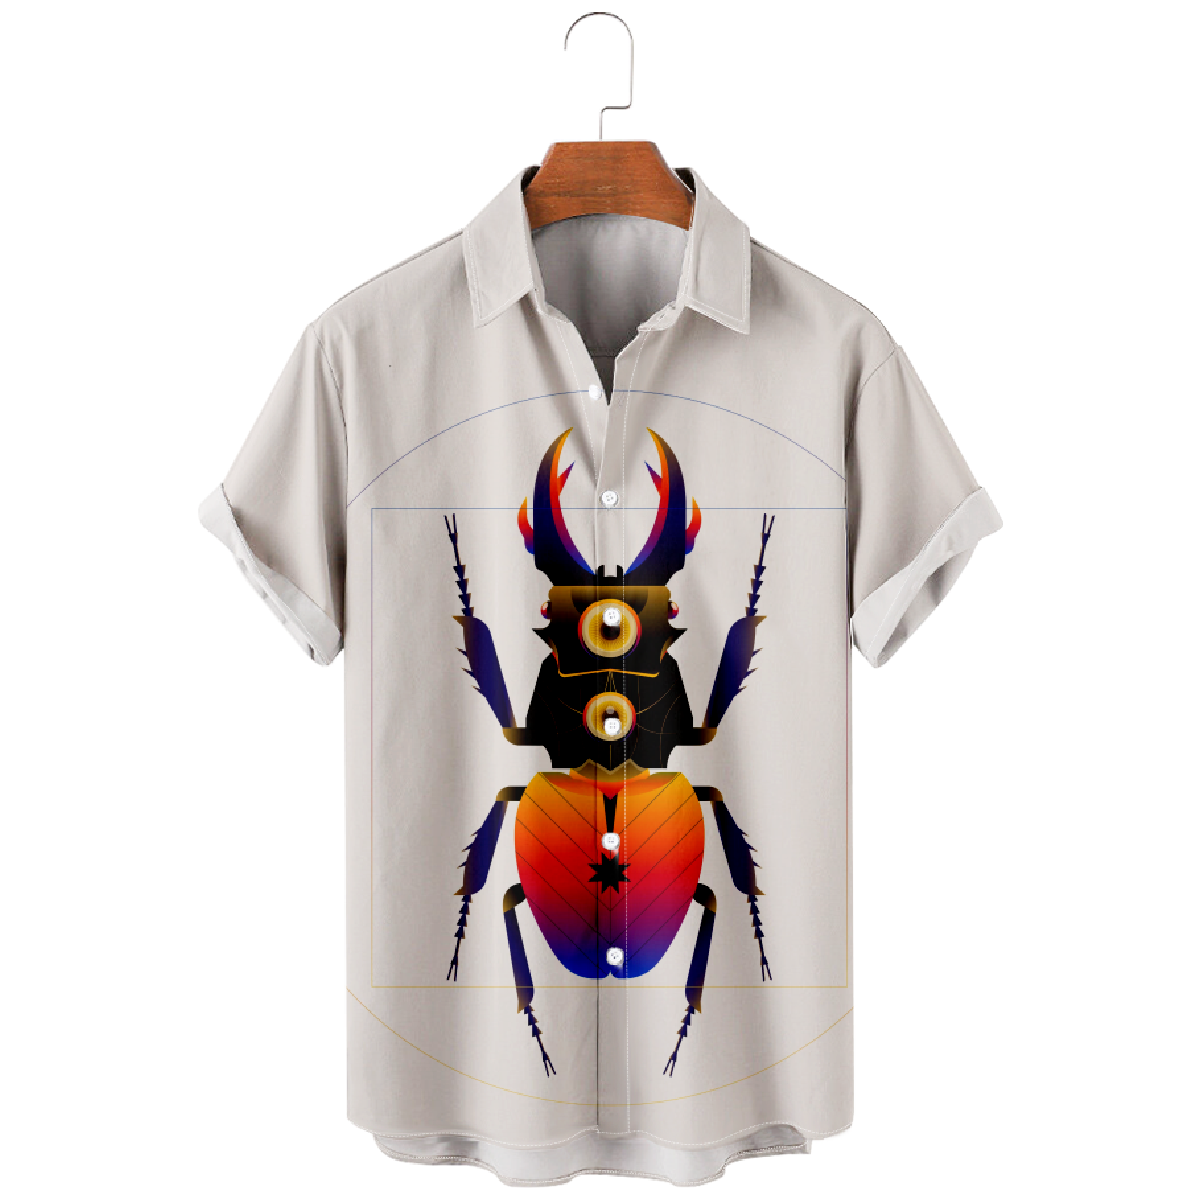 Insect Print Button Up Shirt Mens Short Sleeve Shirt Regular Fit Straight Collar 